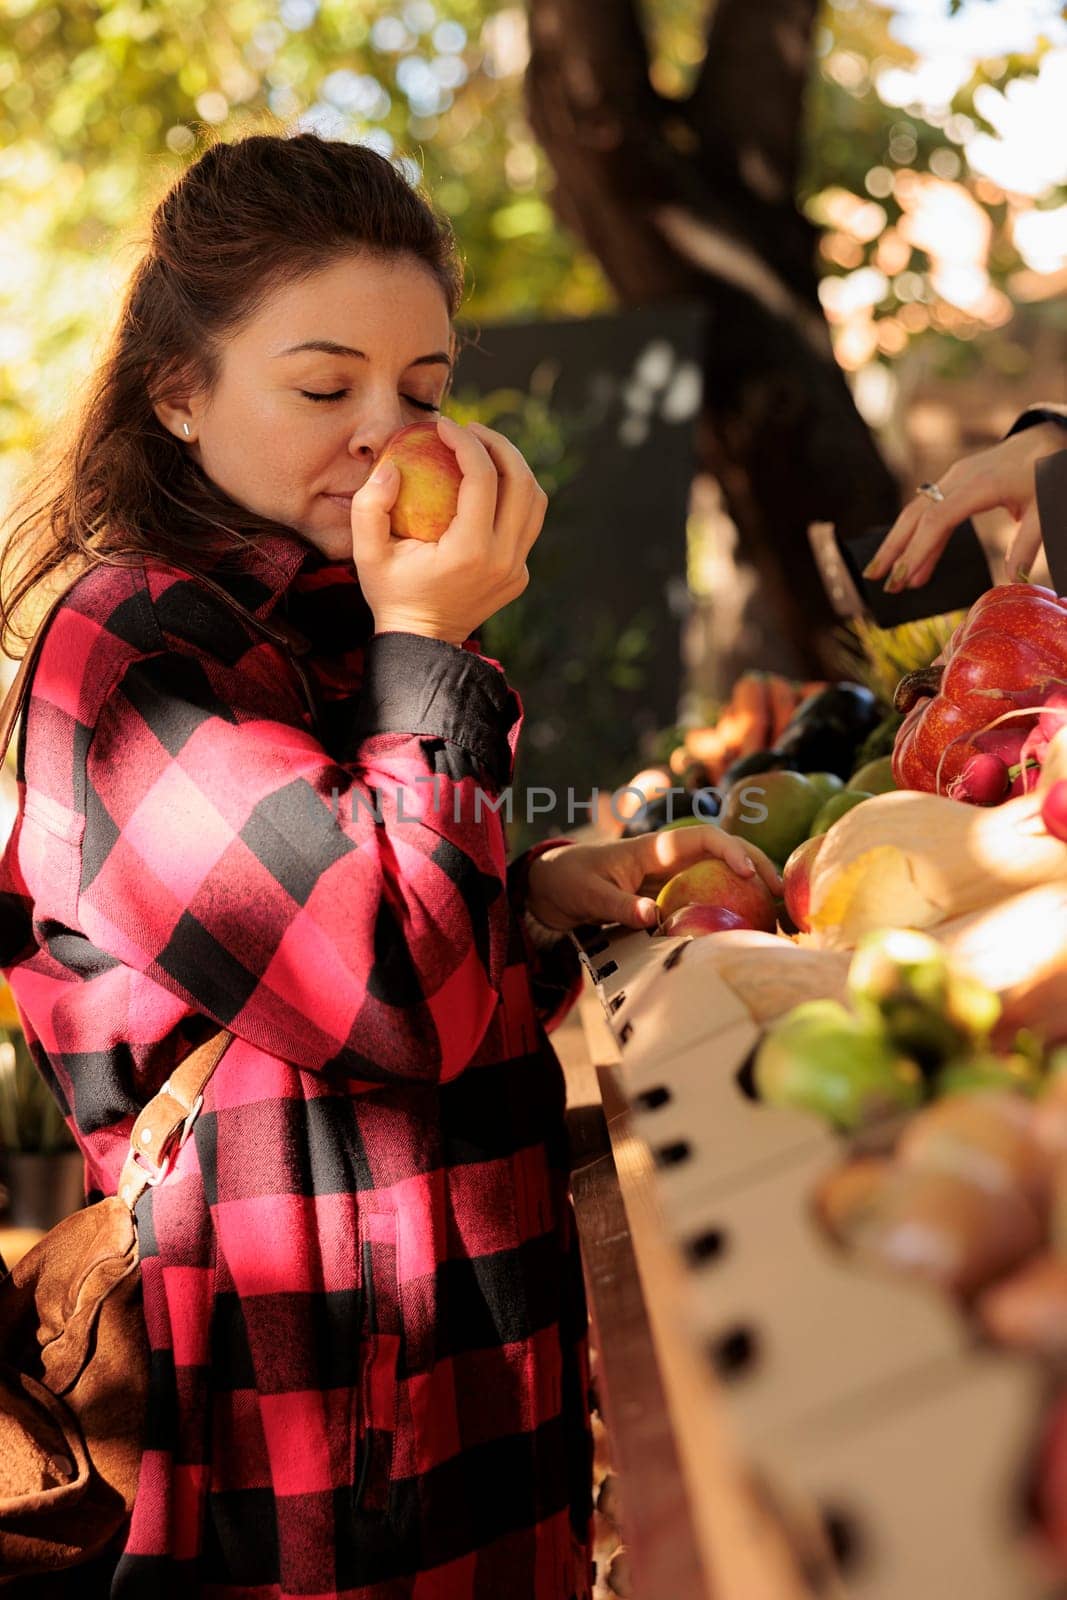 Female buyer enjoying natural fresh smell of apples by DCStudio